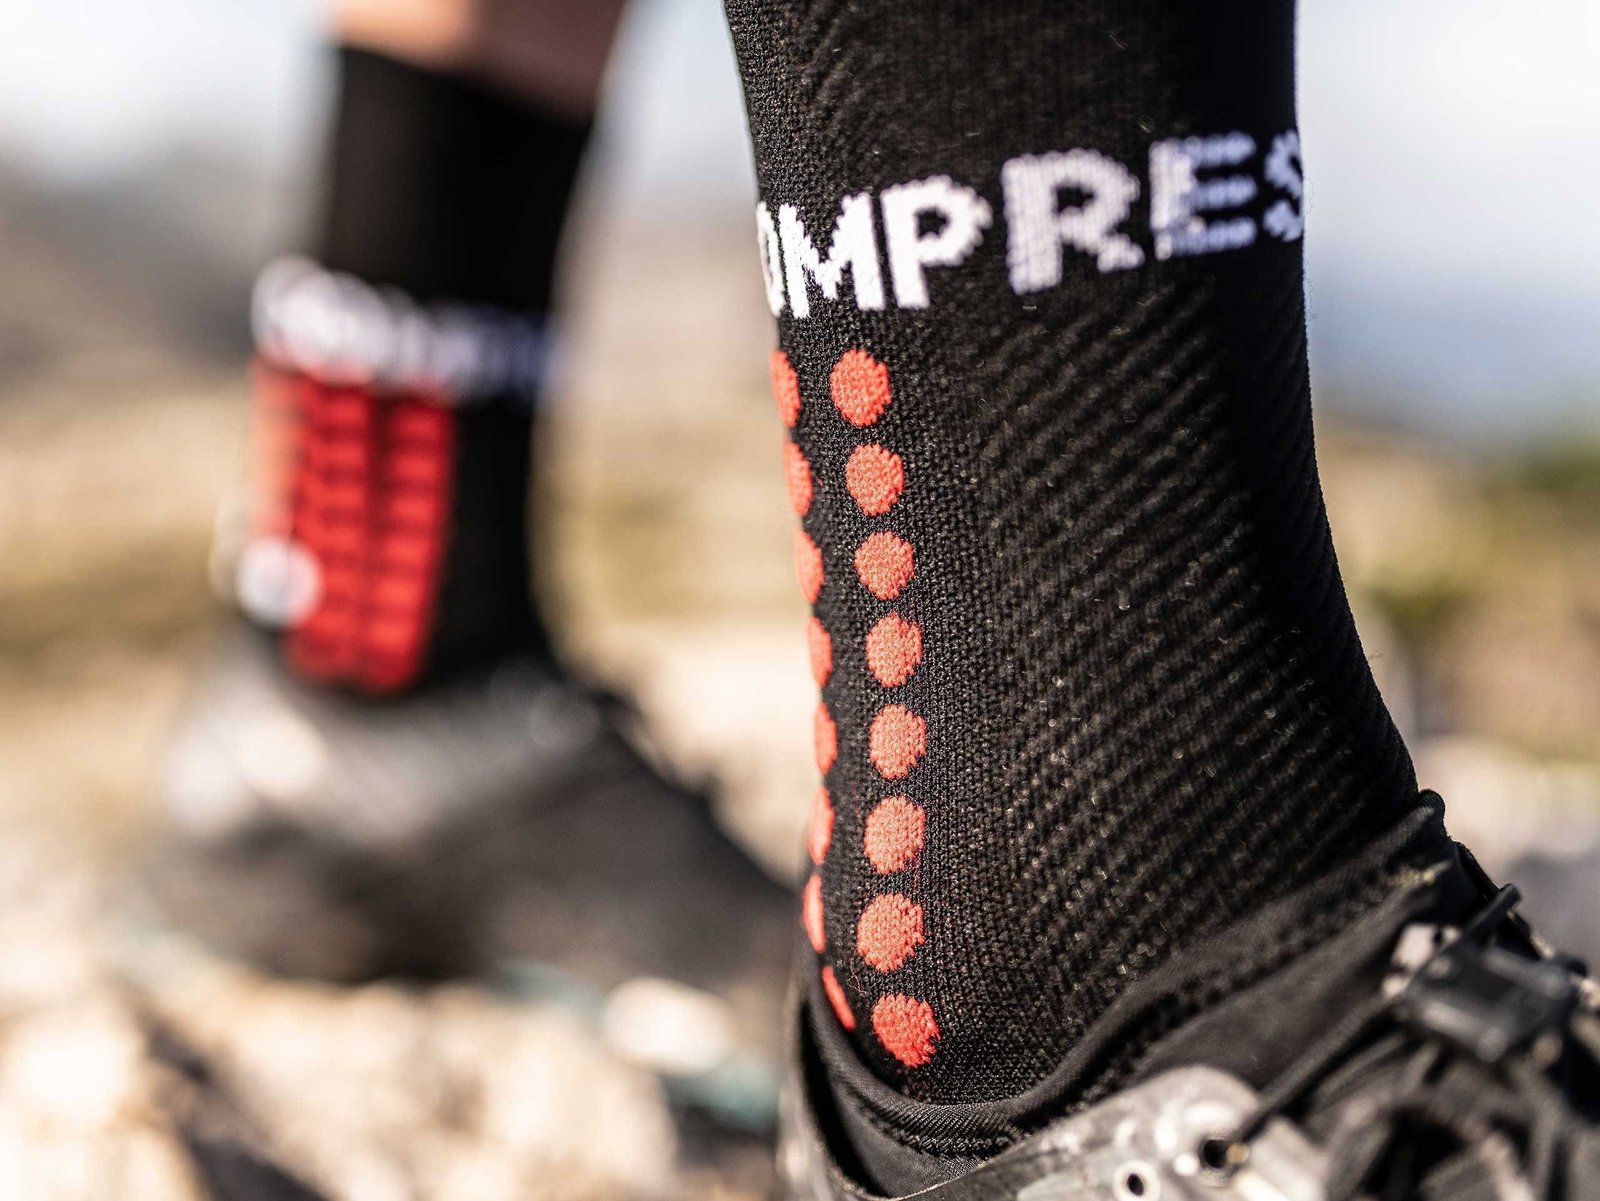 Calcetines de Running largos Compressport Full Negro – A Rueda